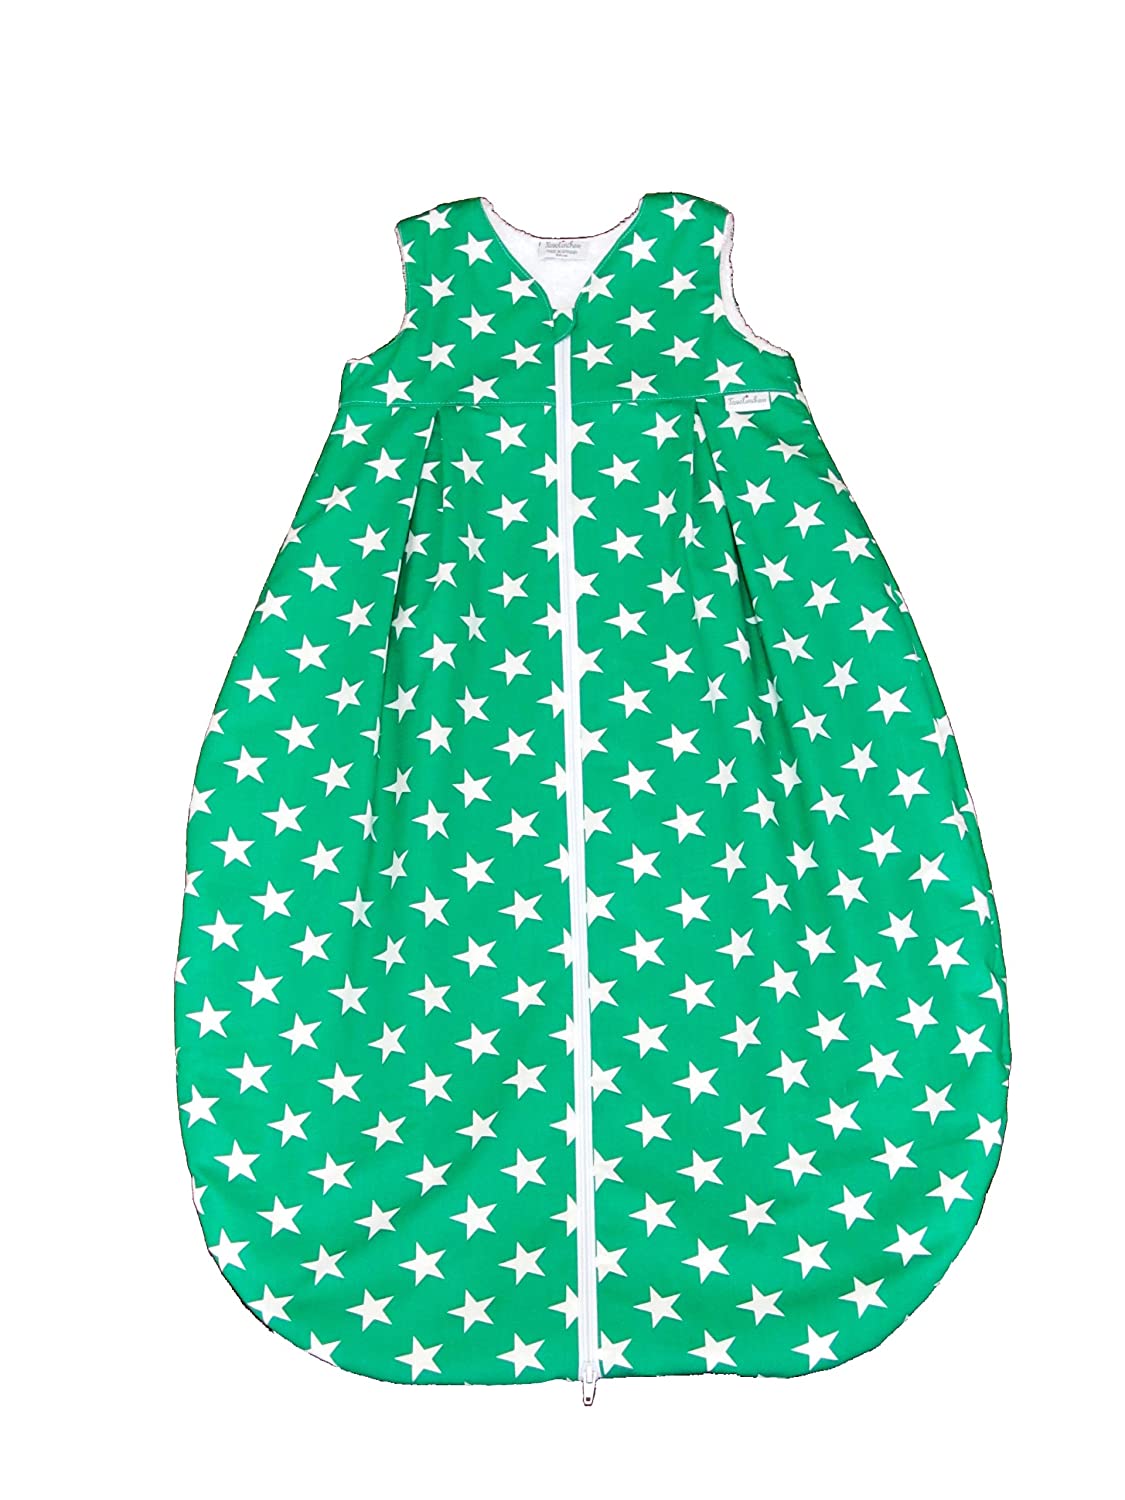 Tavolinchen 35/Terry Cloth 90 cm Sleeping Bag with Stars Design Green